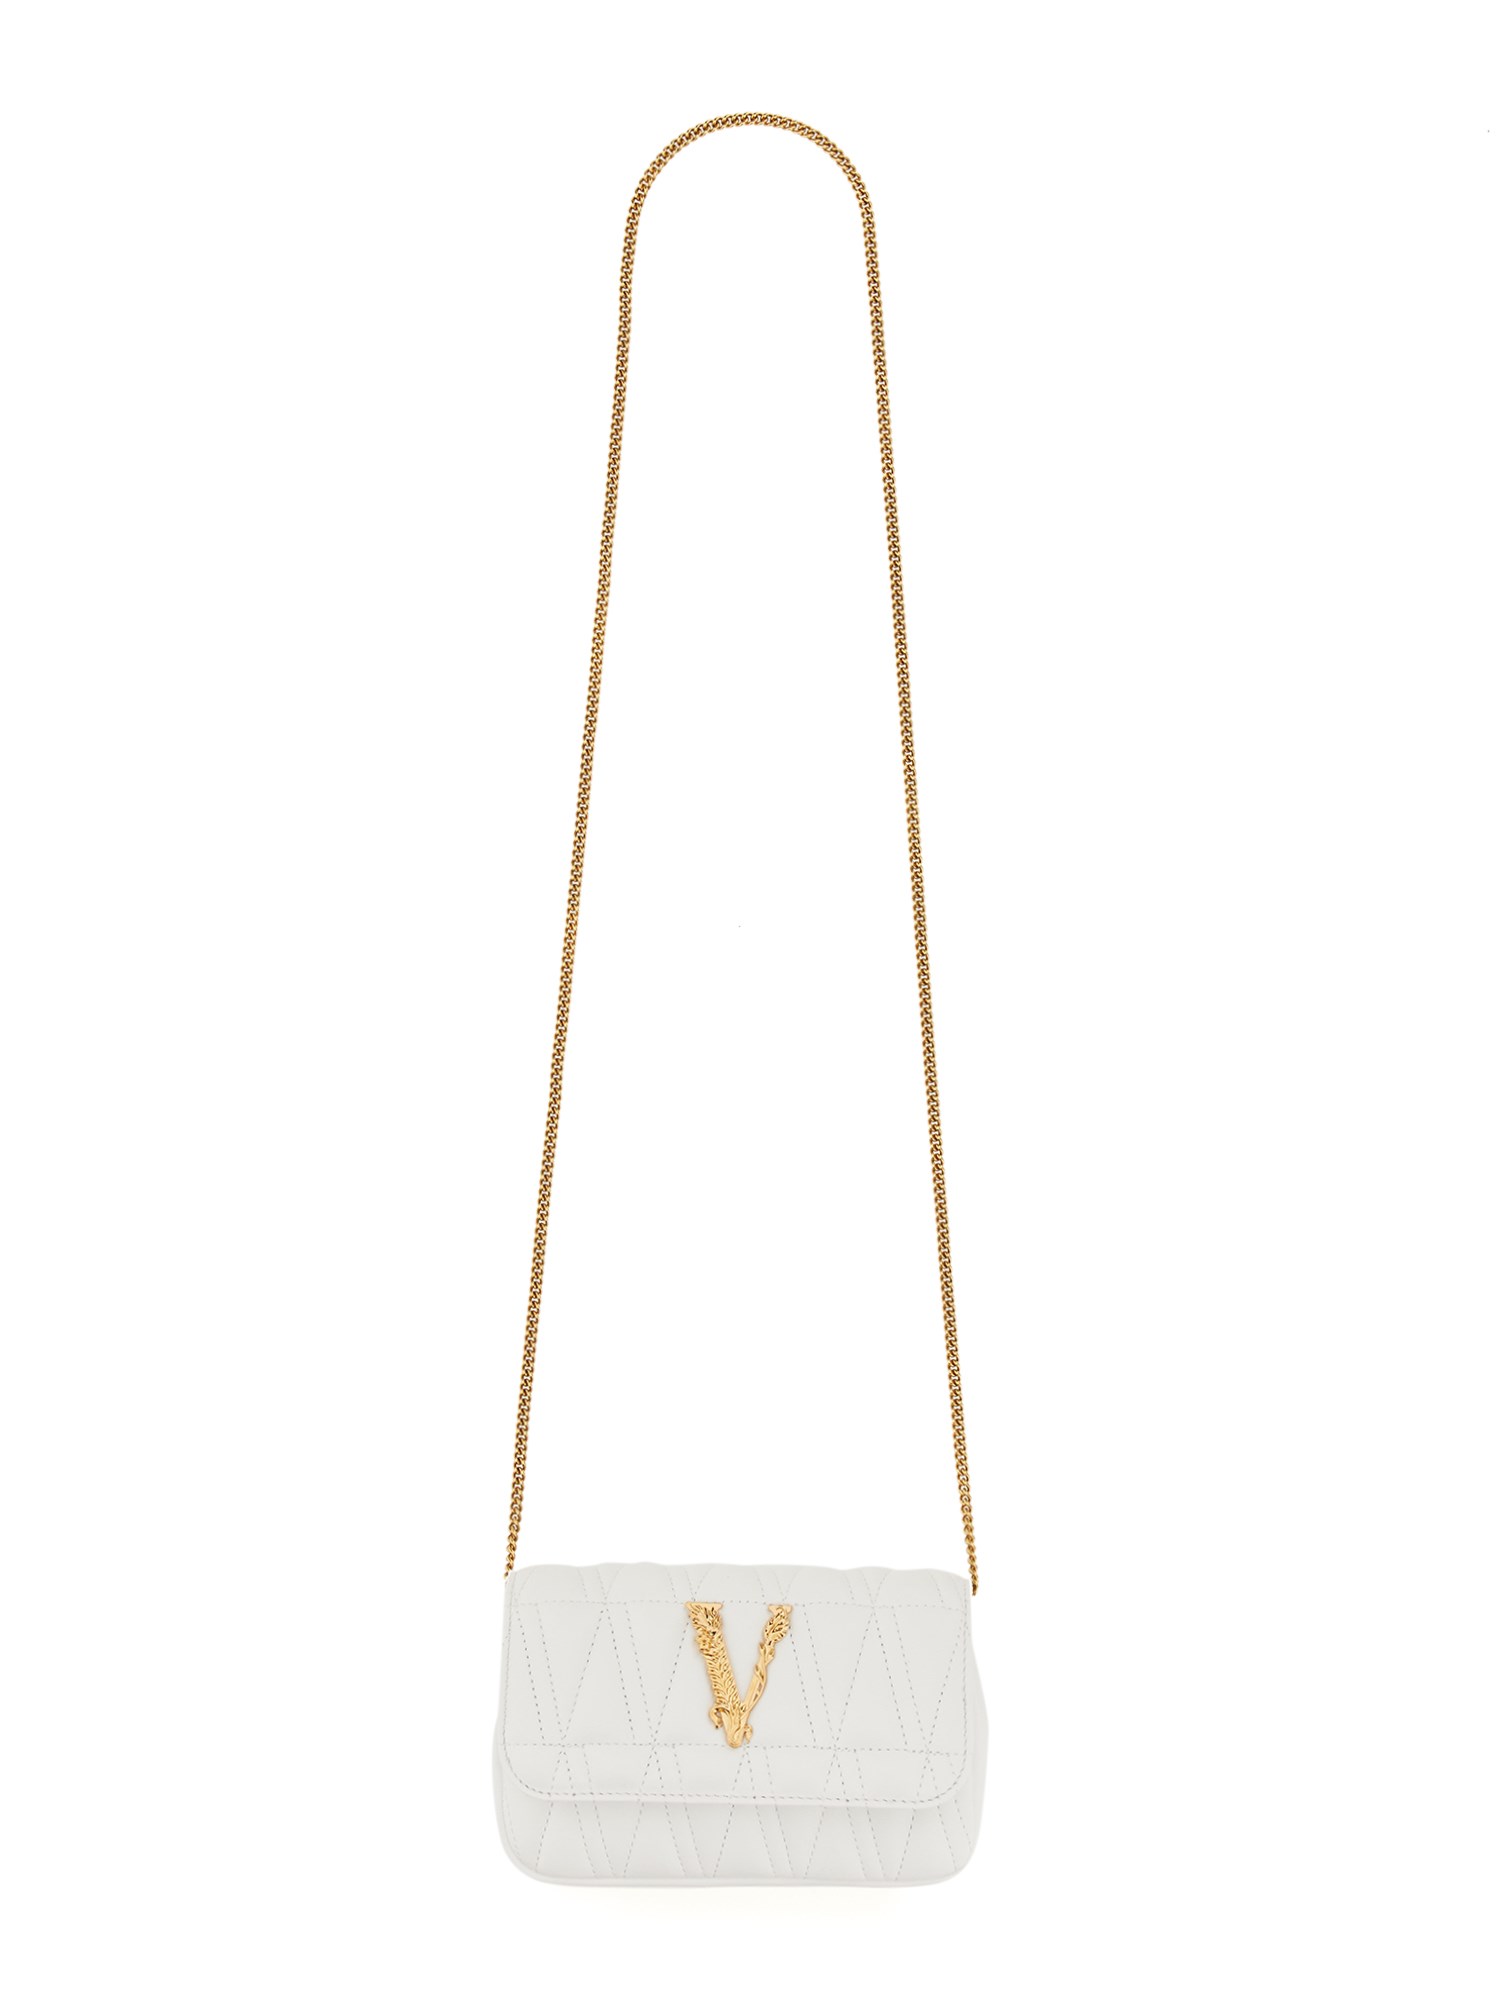 Versace versace bag "virtus"